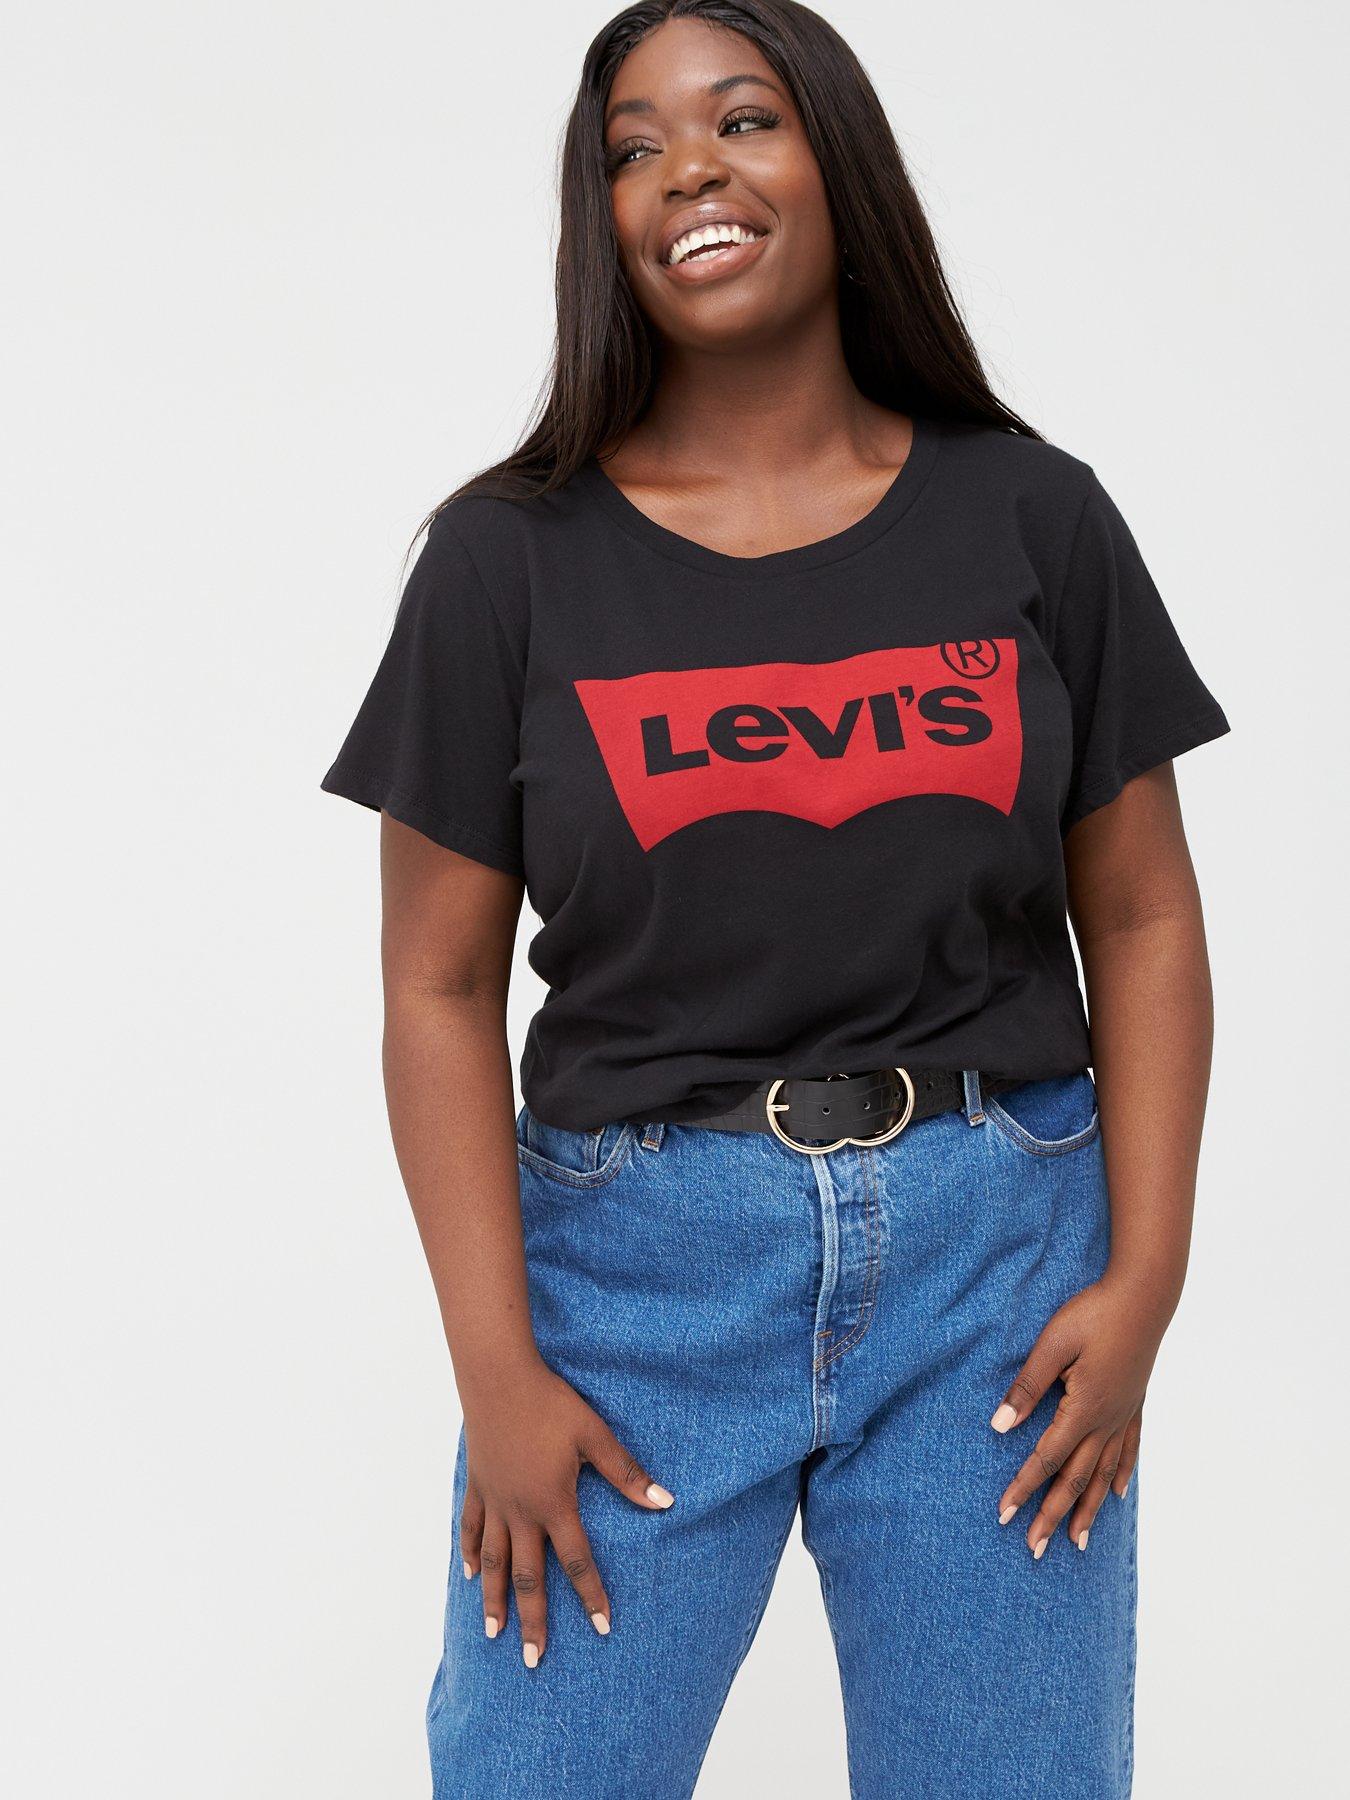 Levi's Women's Iconic Denim Shirt